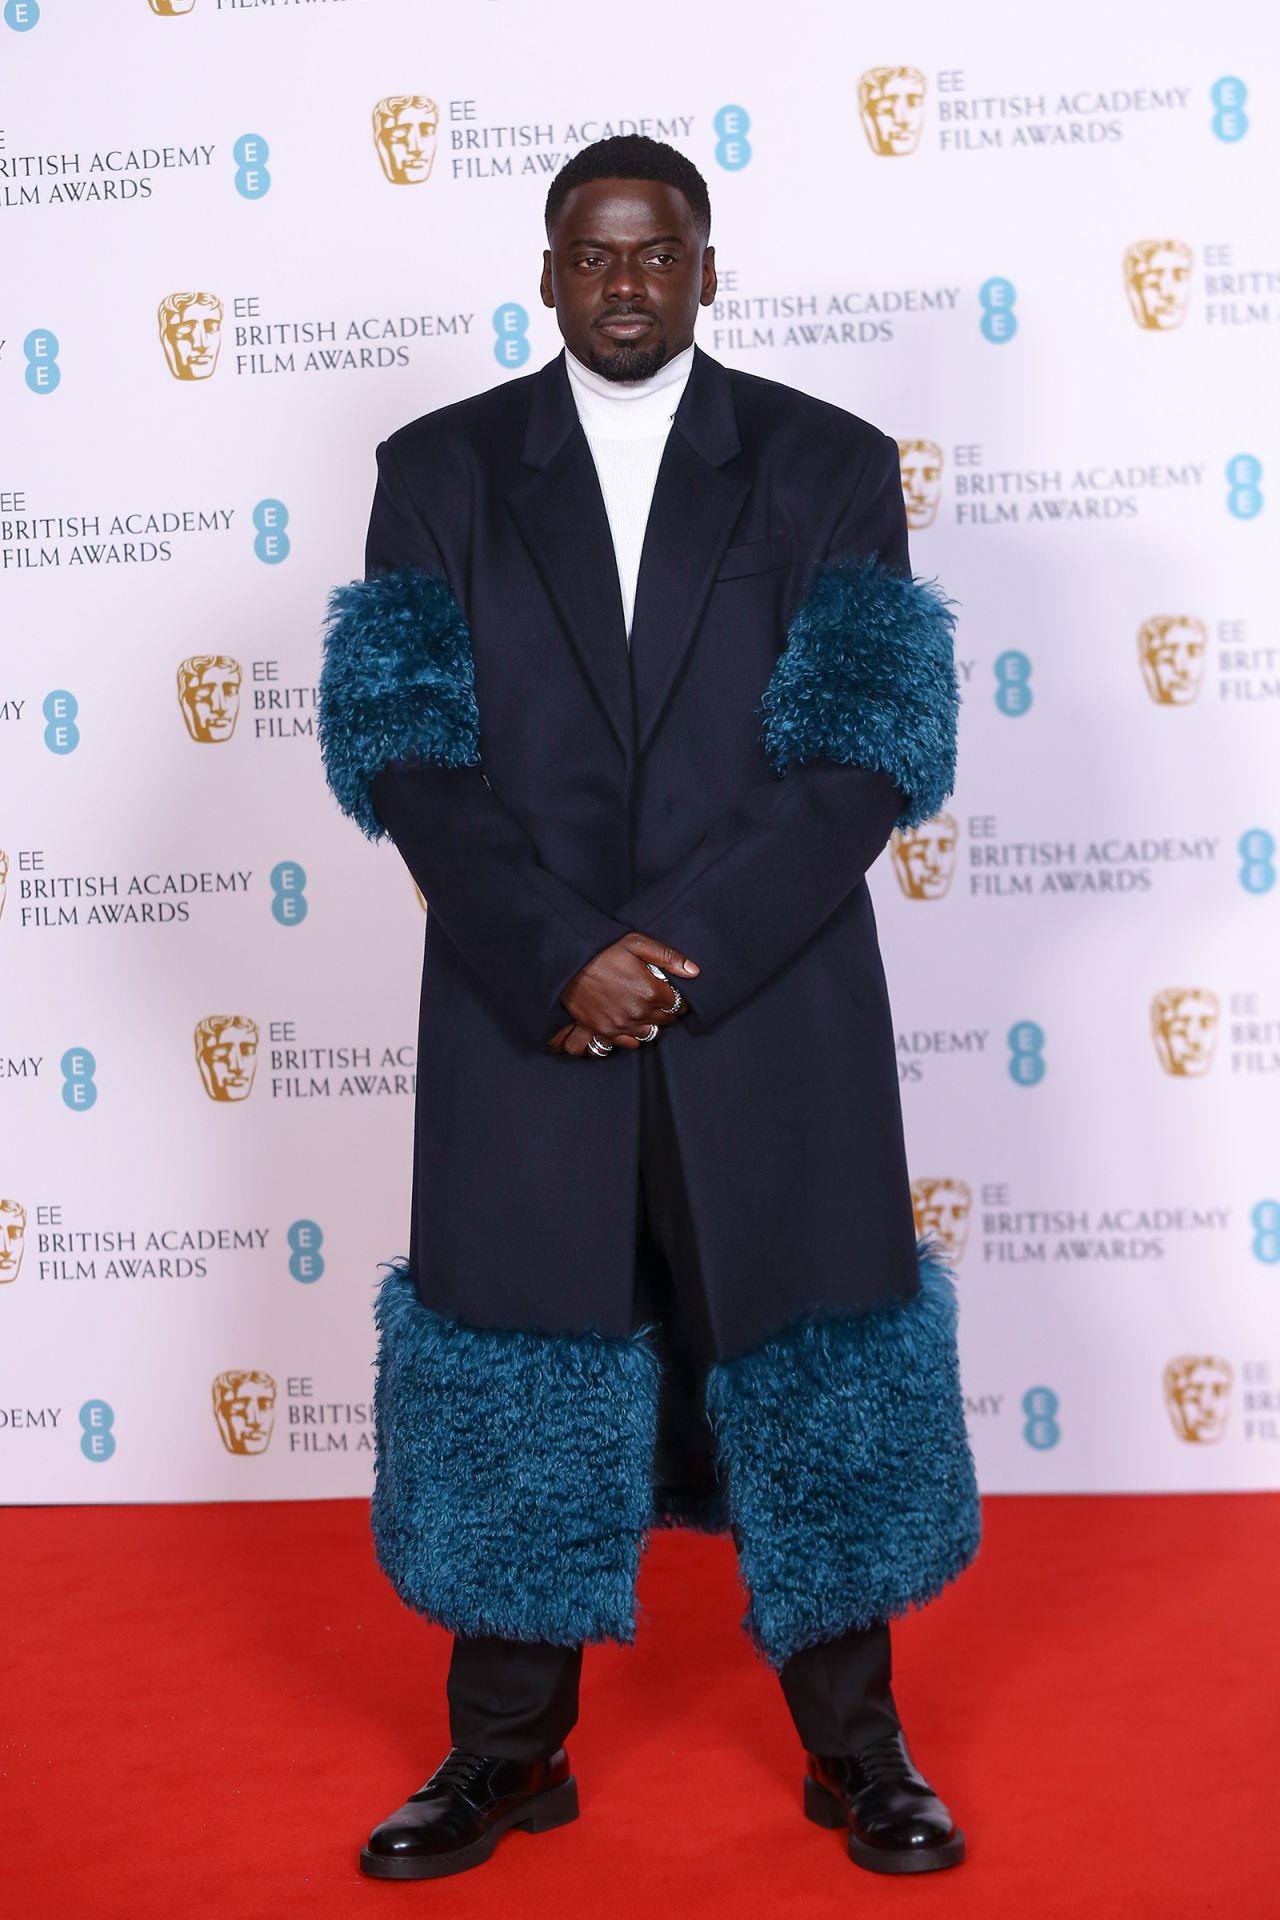 Daniel Kaluuya attends the BAFTAs in London.